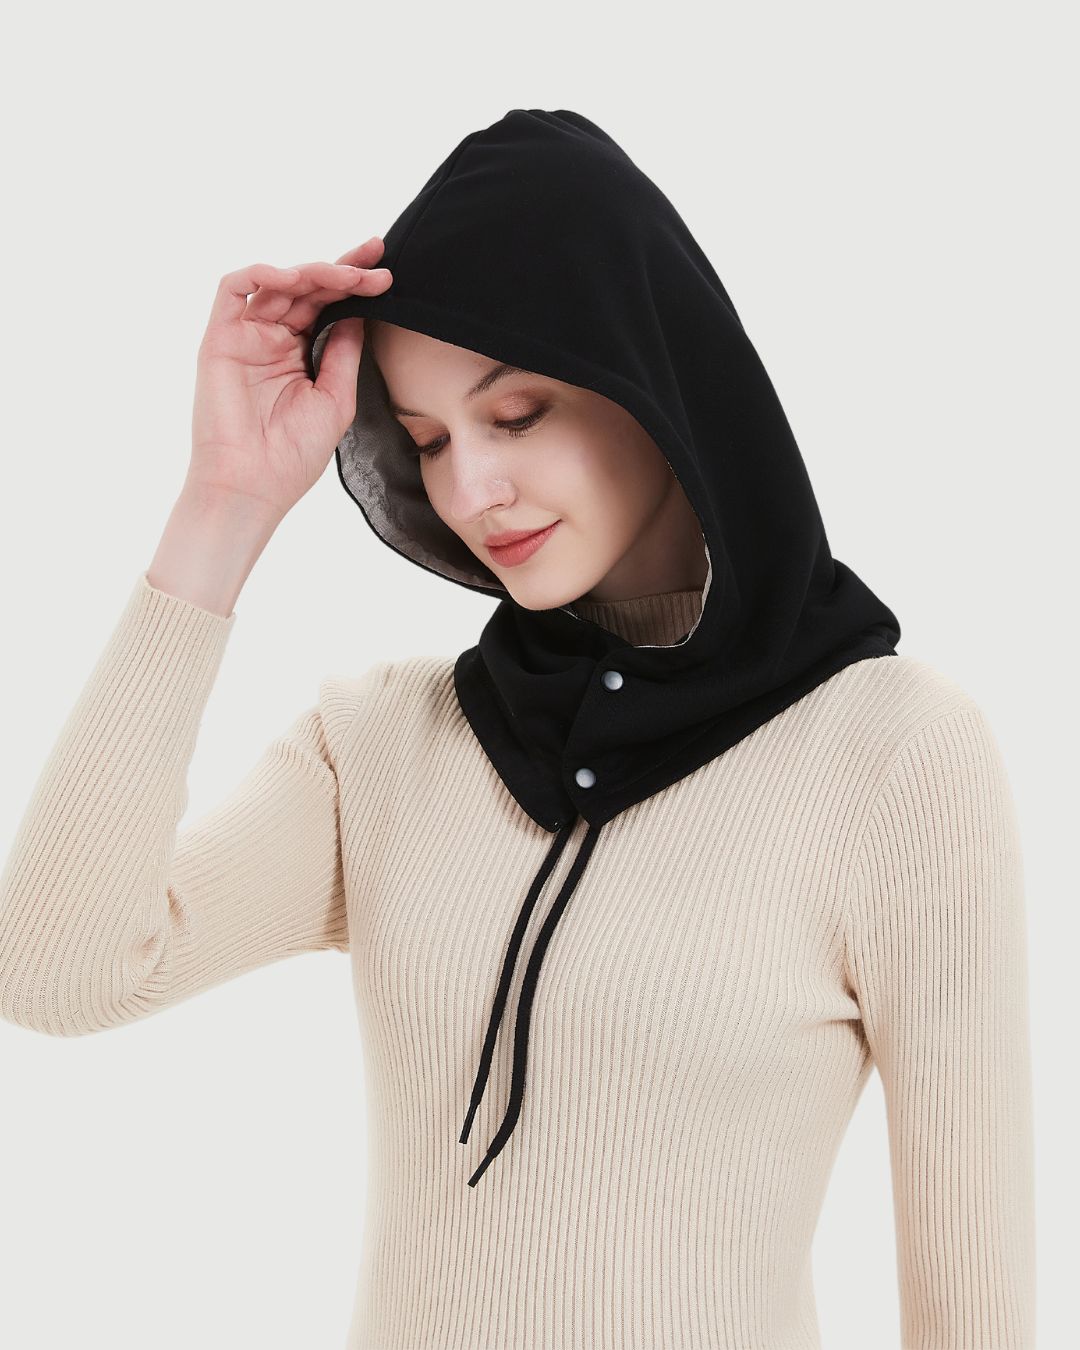 Custom EMF shielding clothing 5G radiation emf protection hoodie